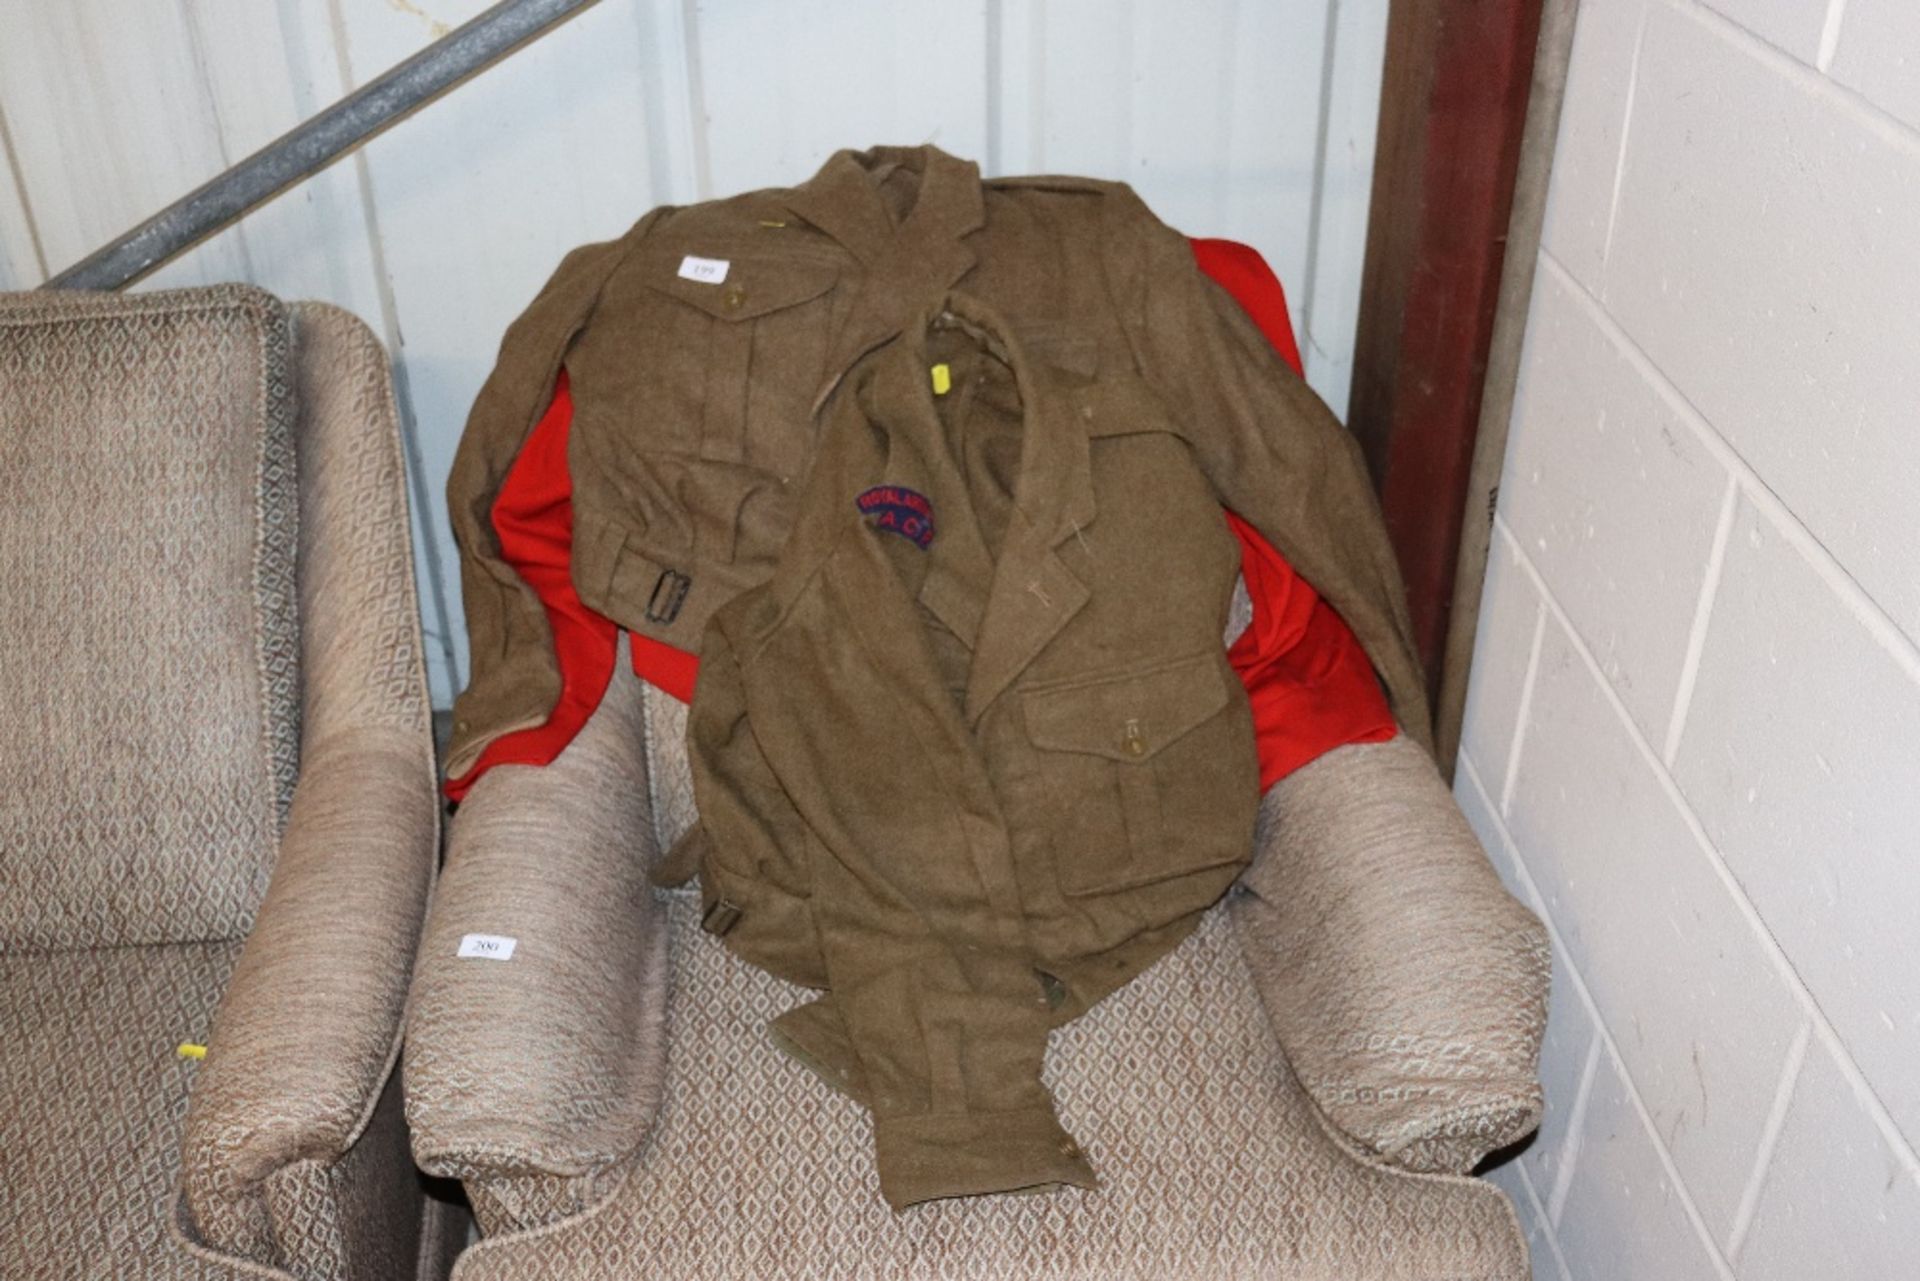 A Royal Artillery battle dress blouse, and other a